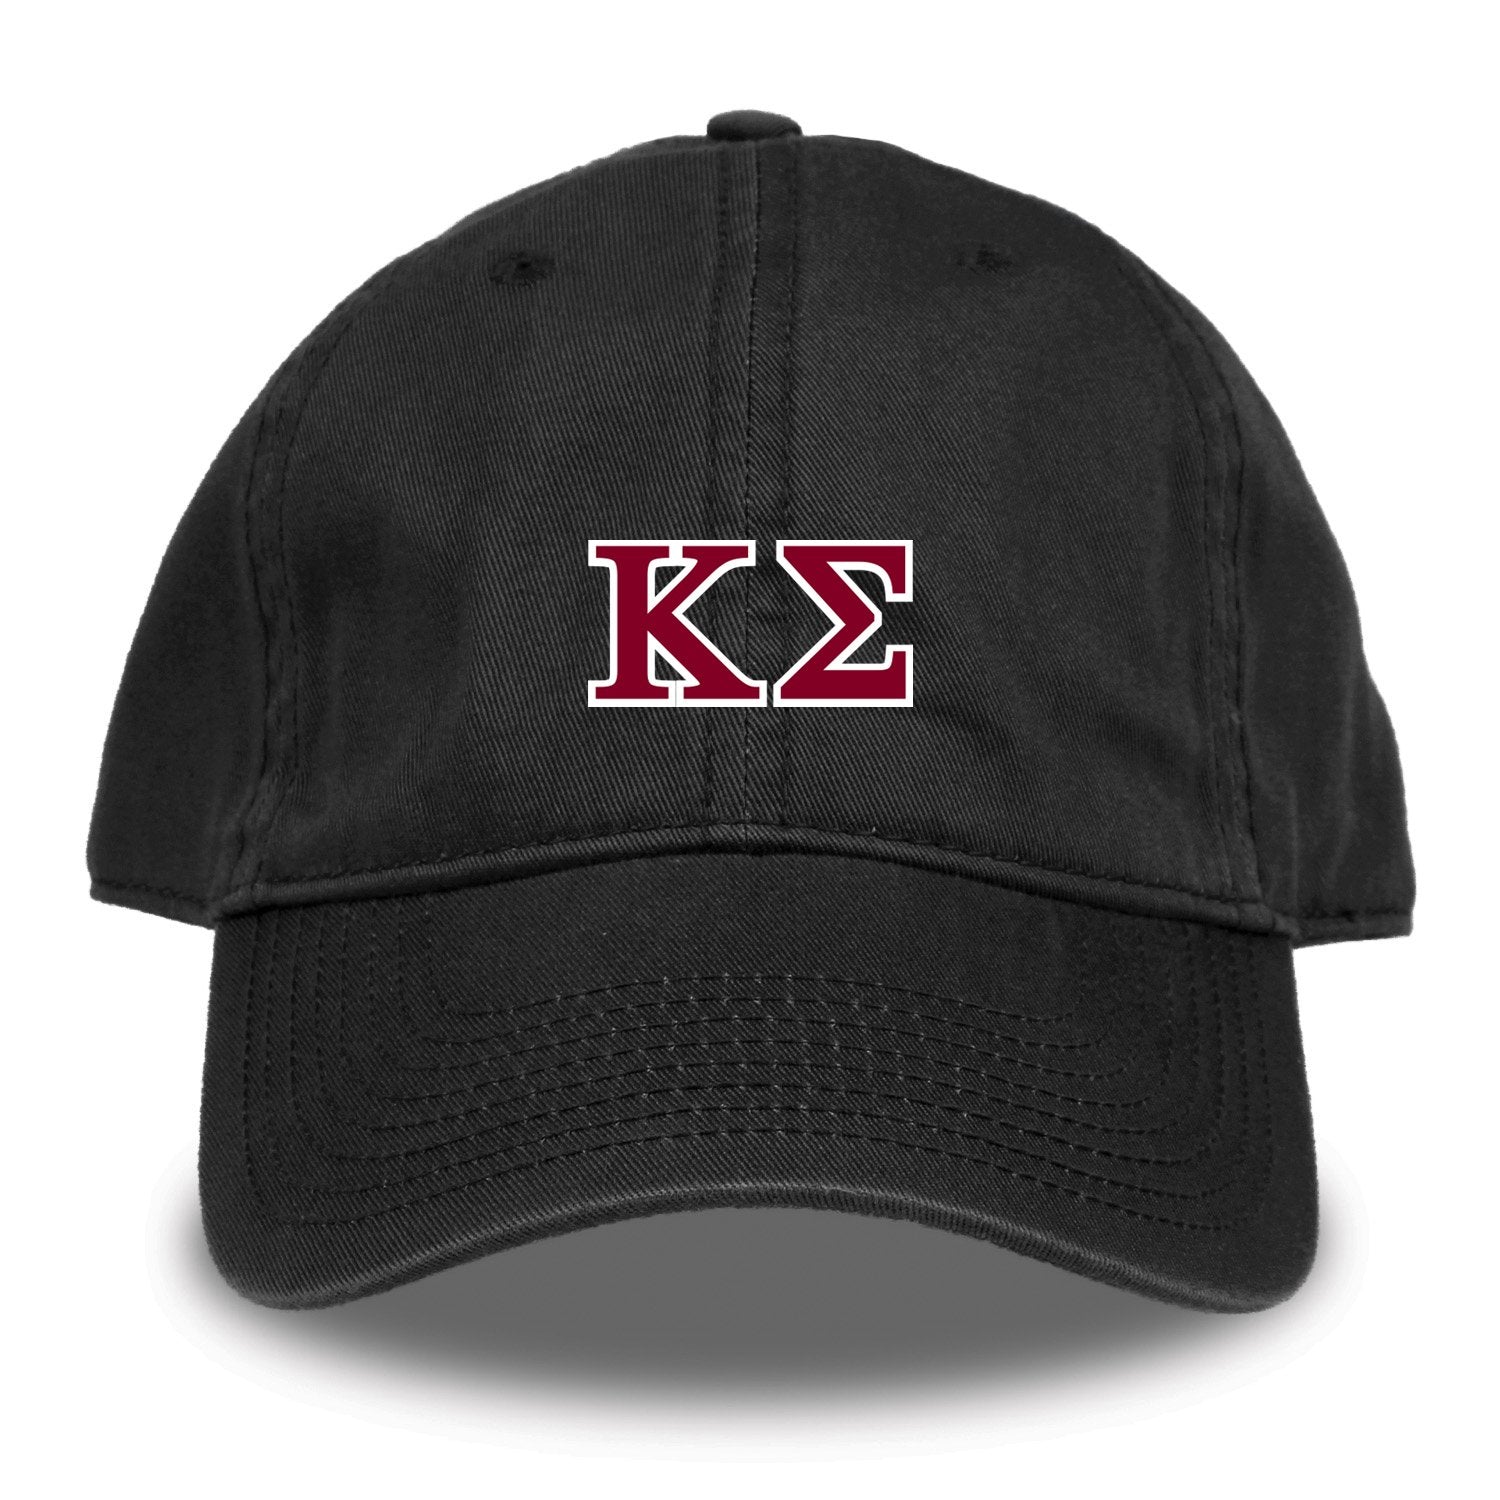 Kappa Sig Black Hat by The Game – Kappa Sigma Official Store | Baseball Caps